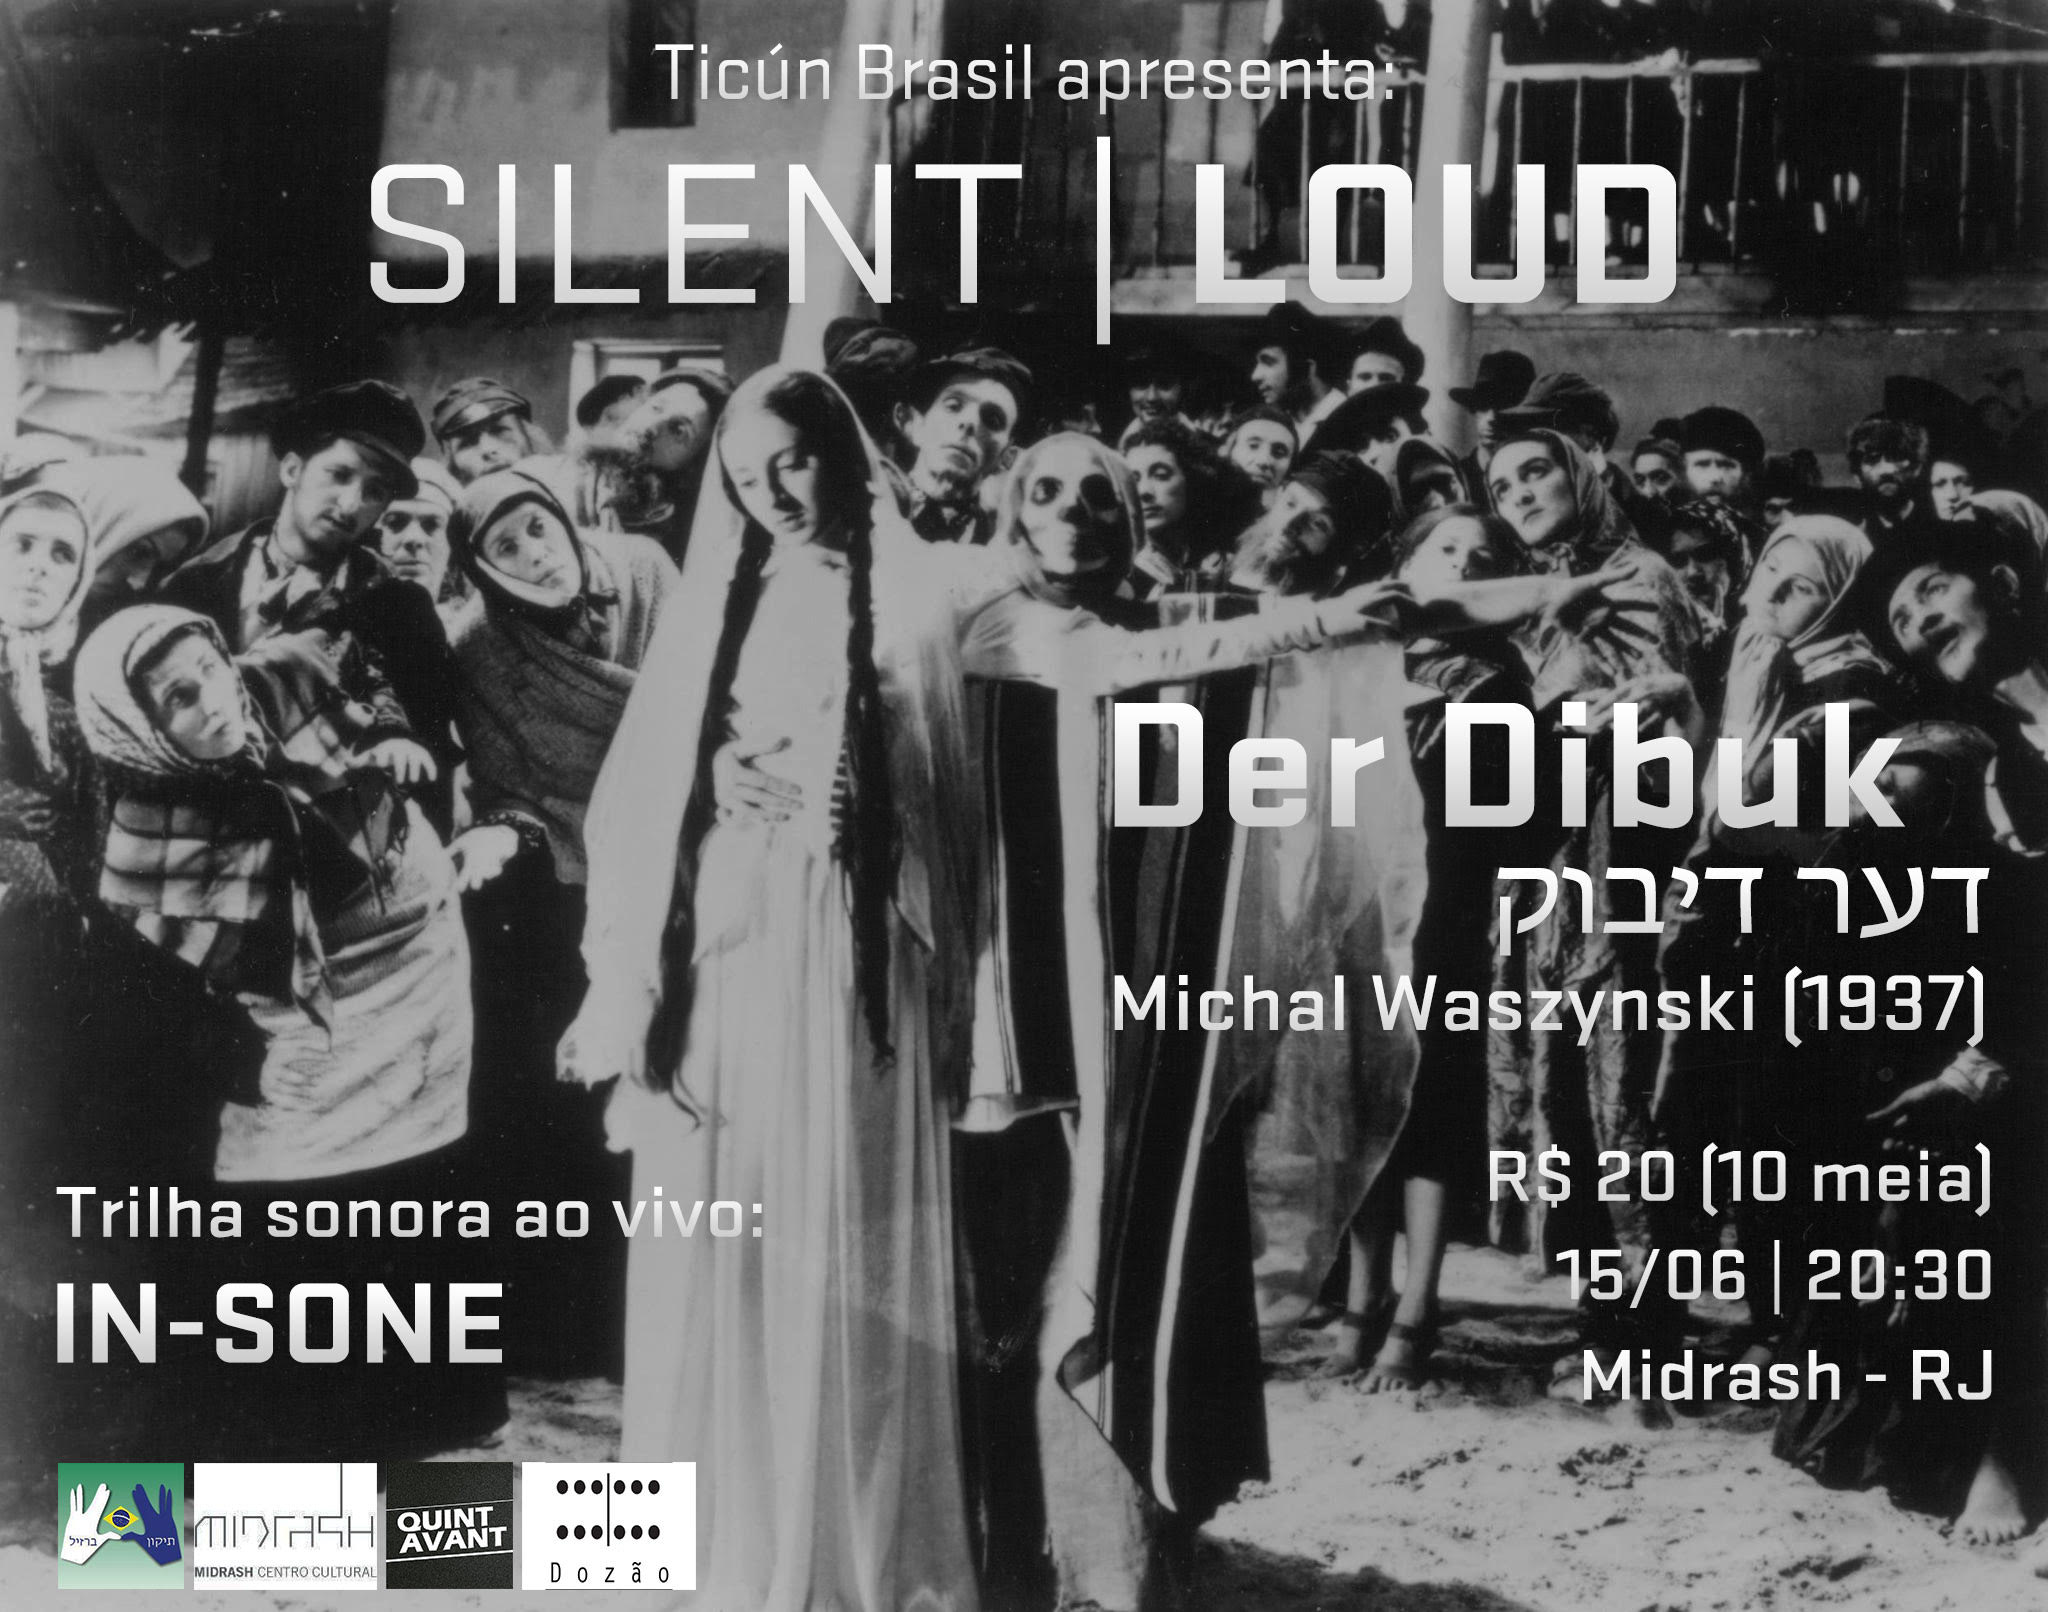 SILENT|LOUD Concert Film Series Returns to Rio de Janeiro